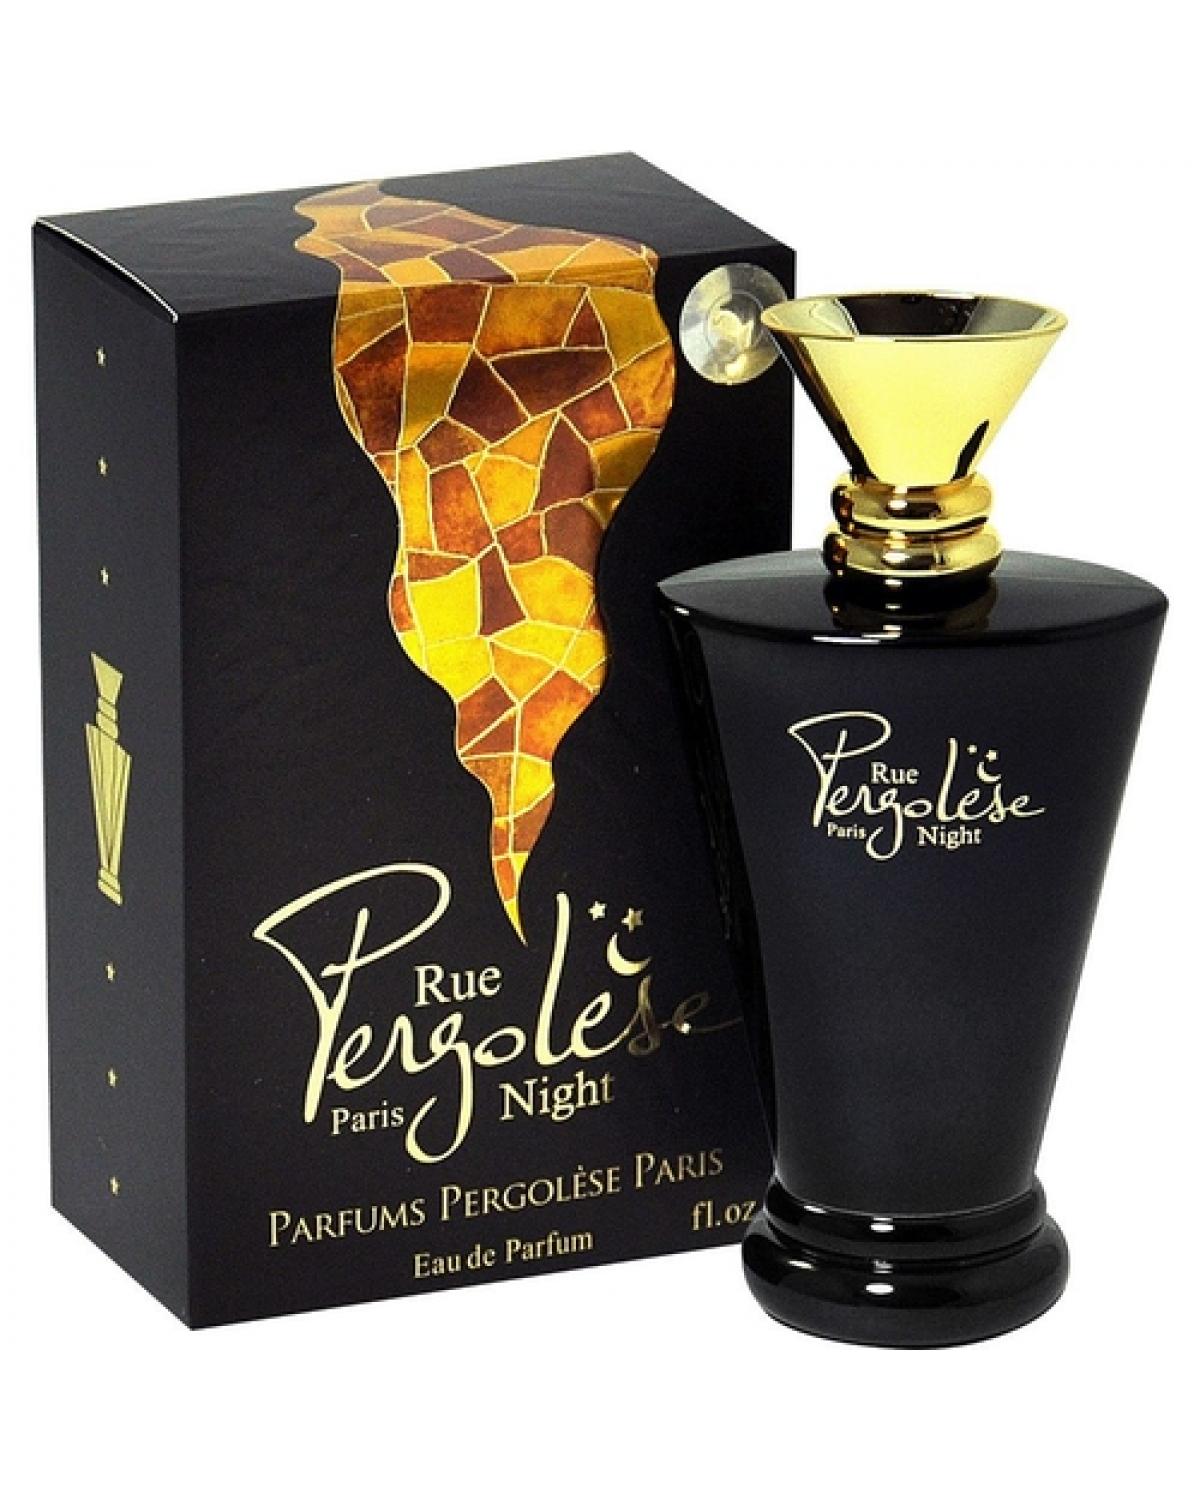 Rue Pergolese Night Parfums Pergolèse Paris - Perfume Feminino - Eau de Parfum - 50ml